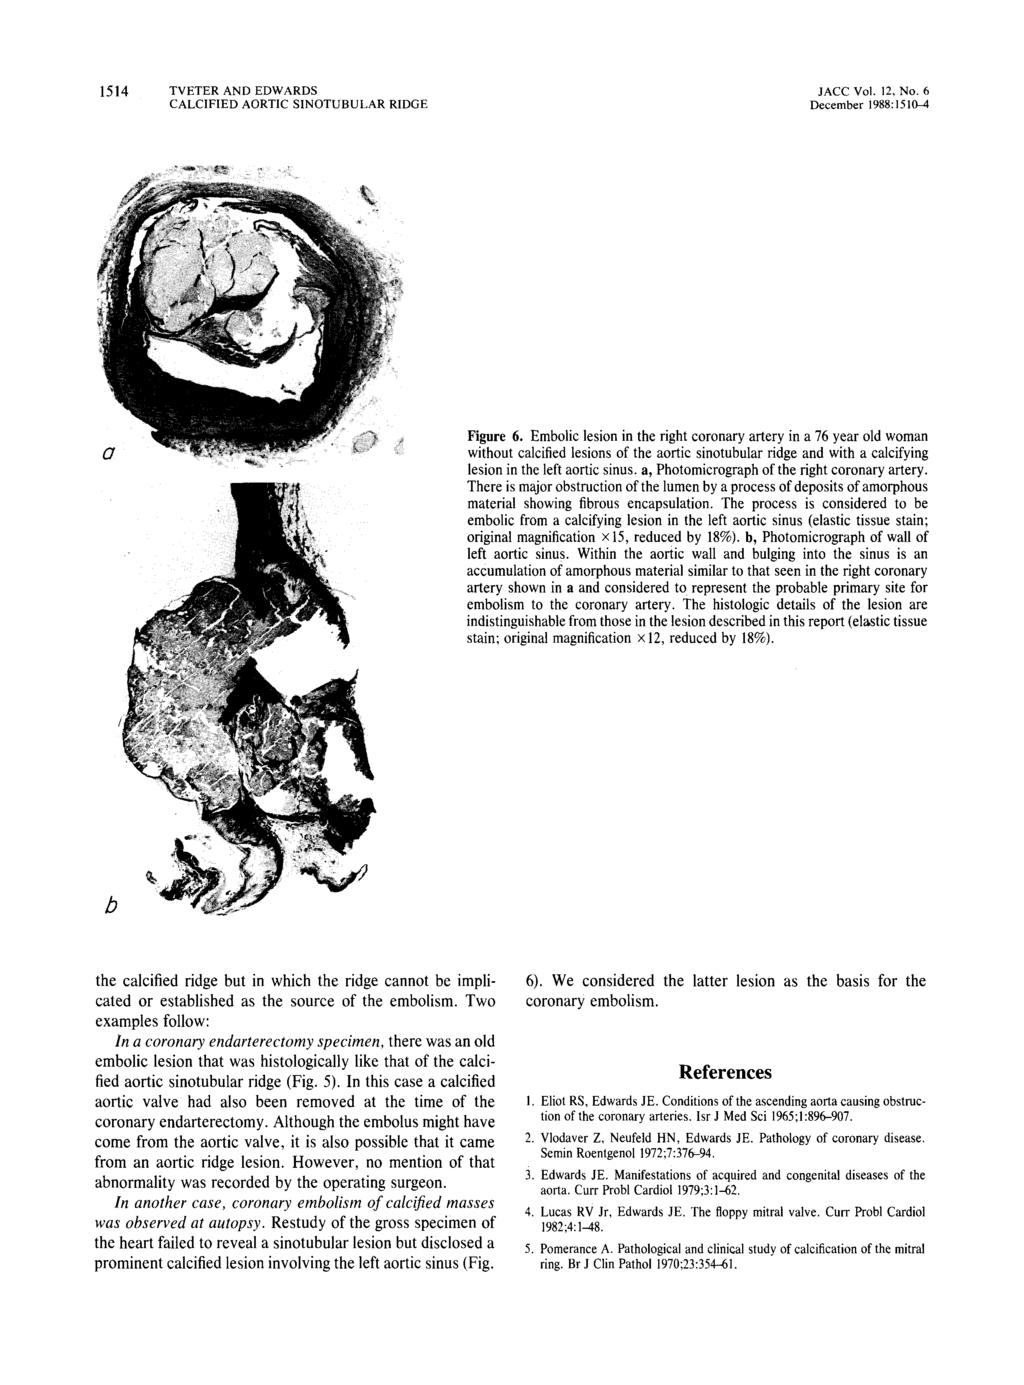 ITUBULAR RIDGE JACe Vol. 12, No.6 December 1988:1510-4 Figure 6.